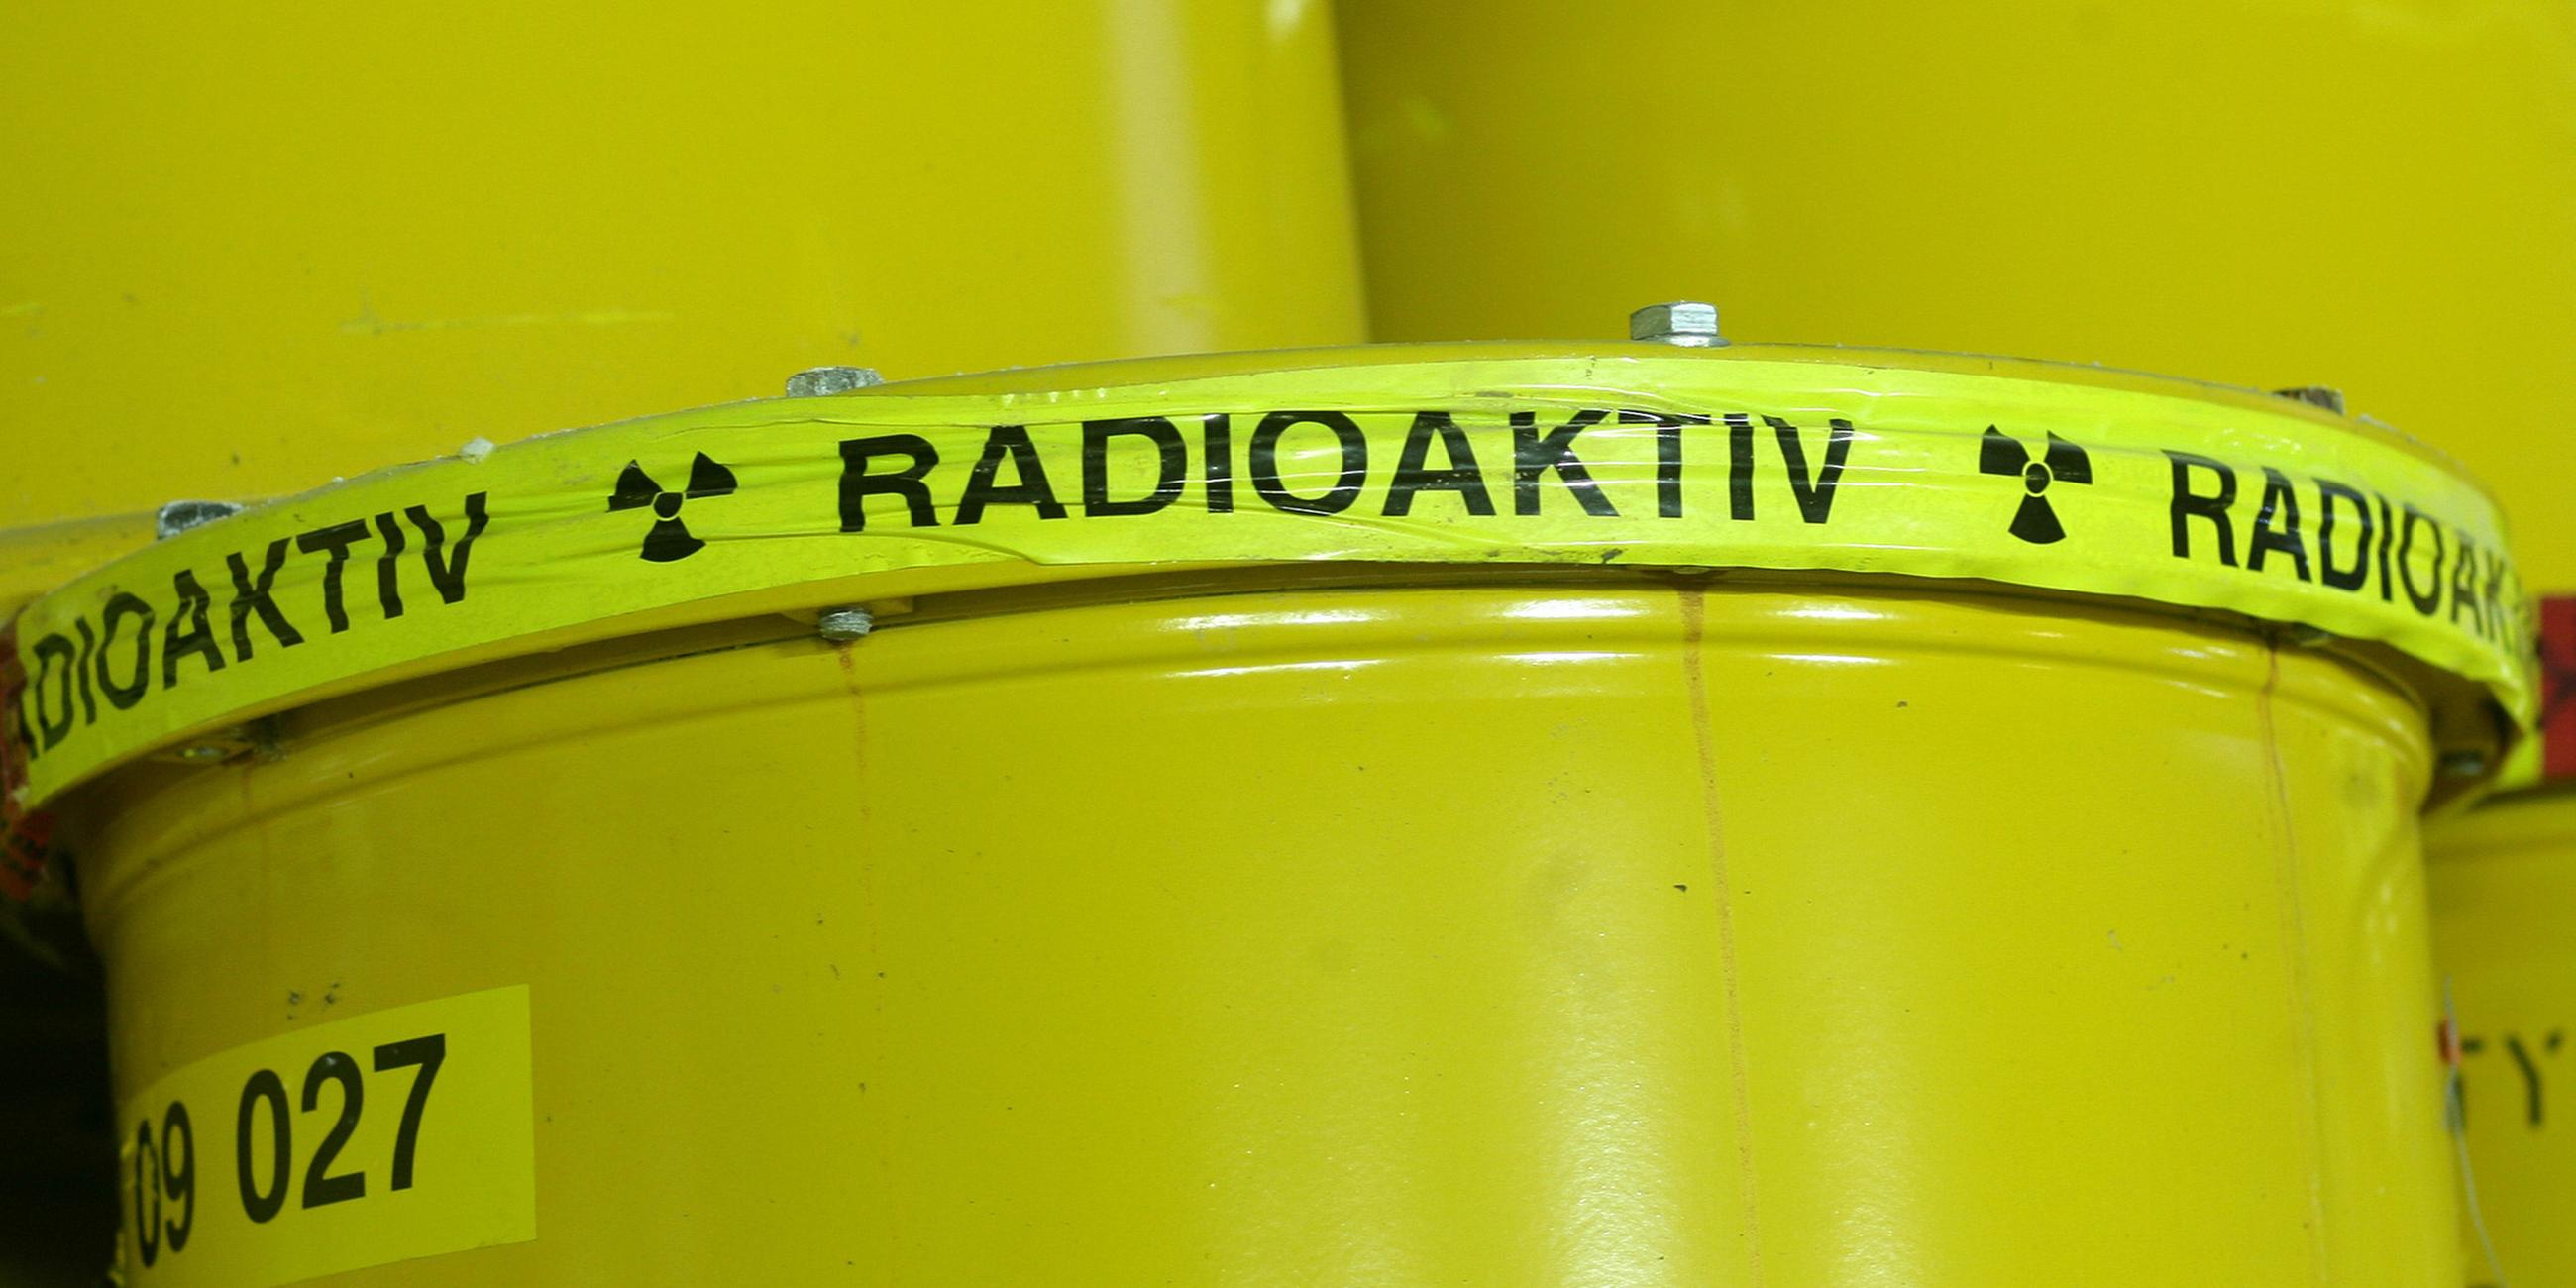 Fässer mit Schriftzug "Radioaktiv" im Endlager Morsleben